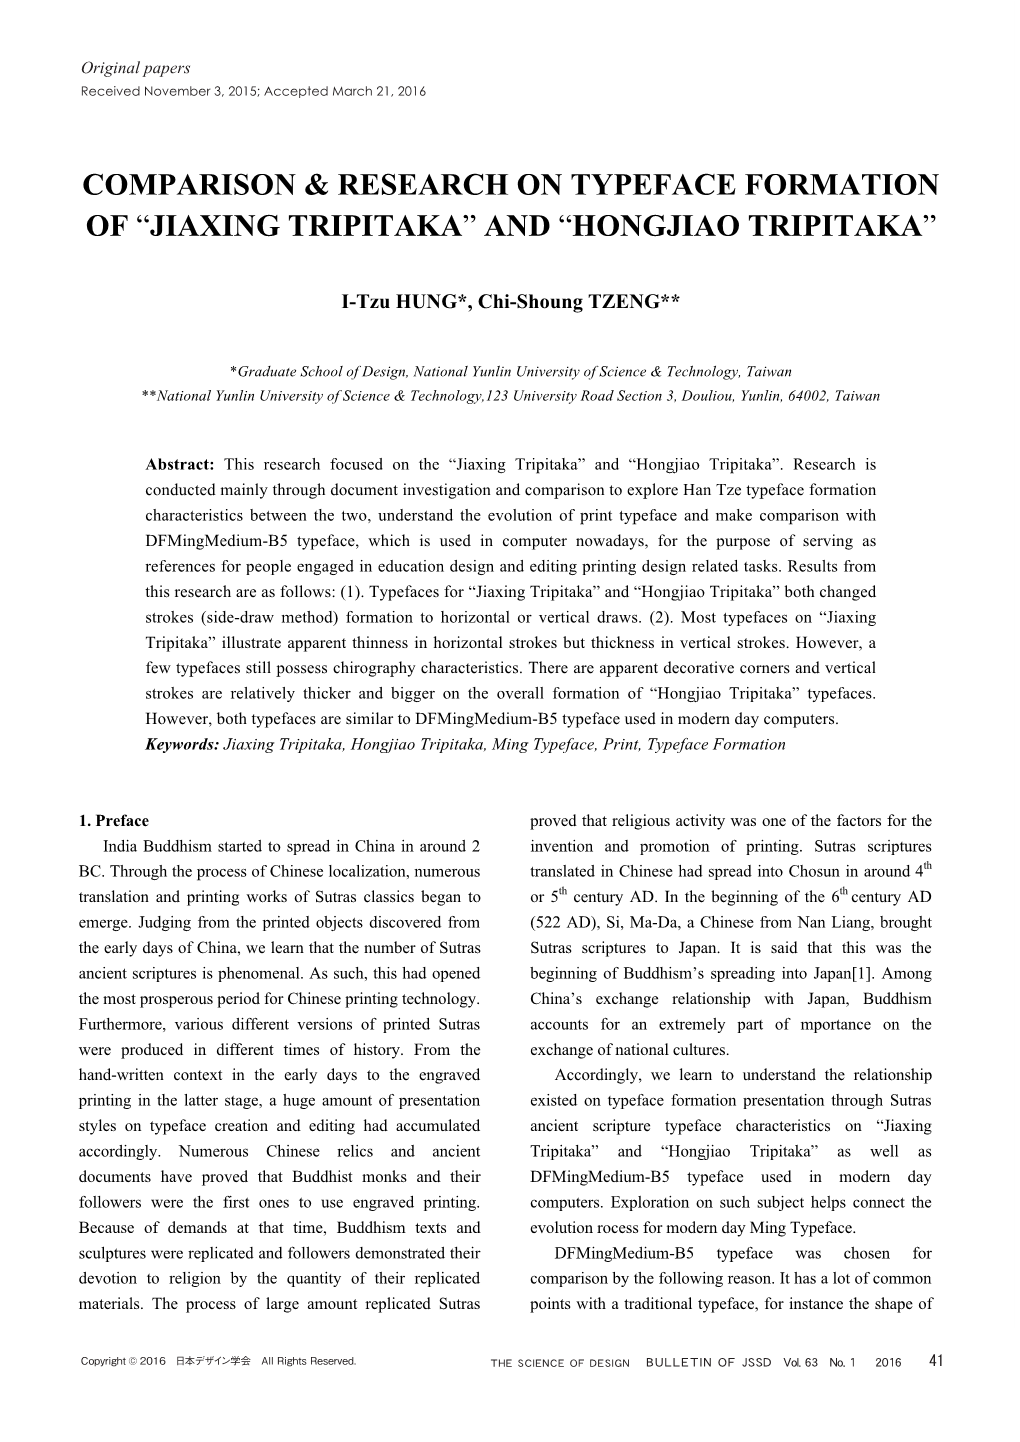 Jiaxing Tripitaka” and “Hongjiao Tripitaka”